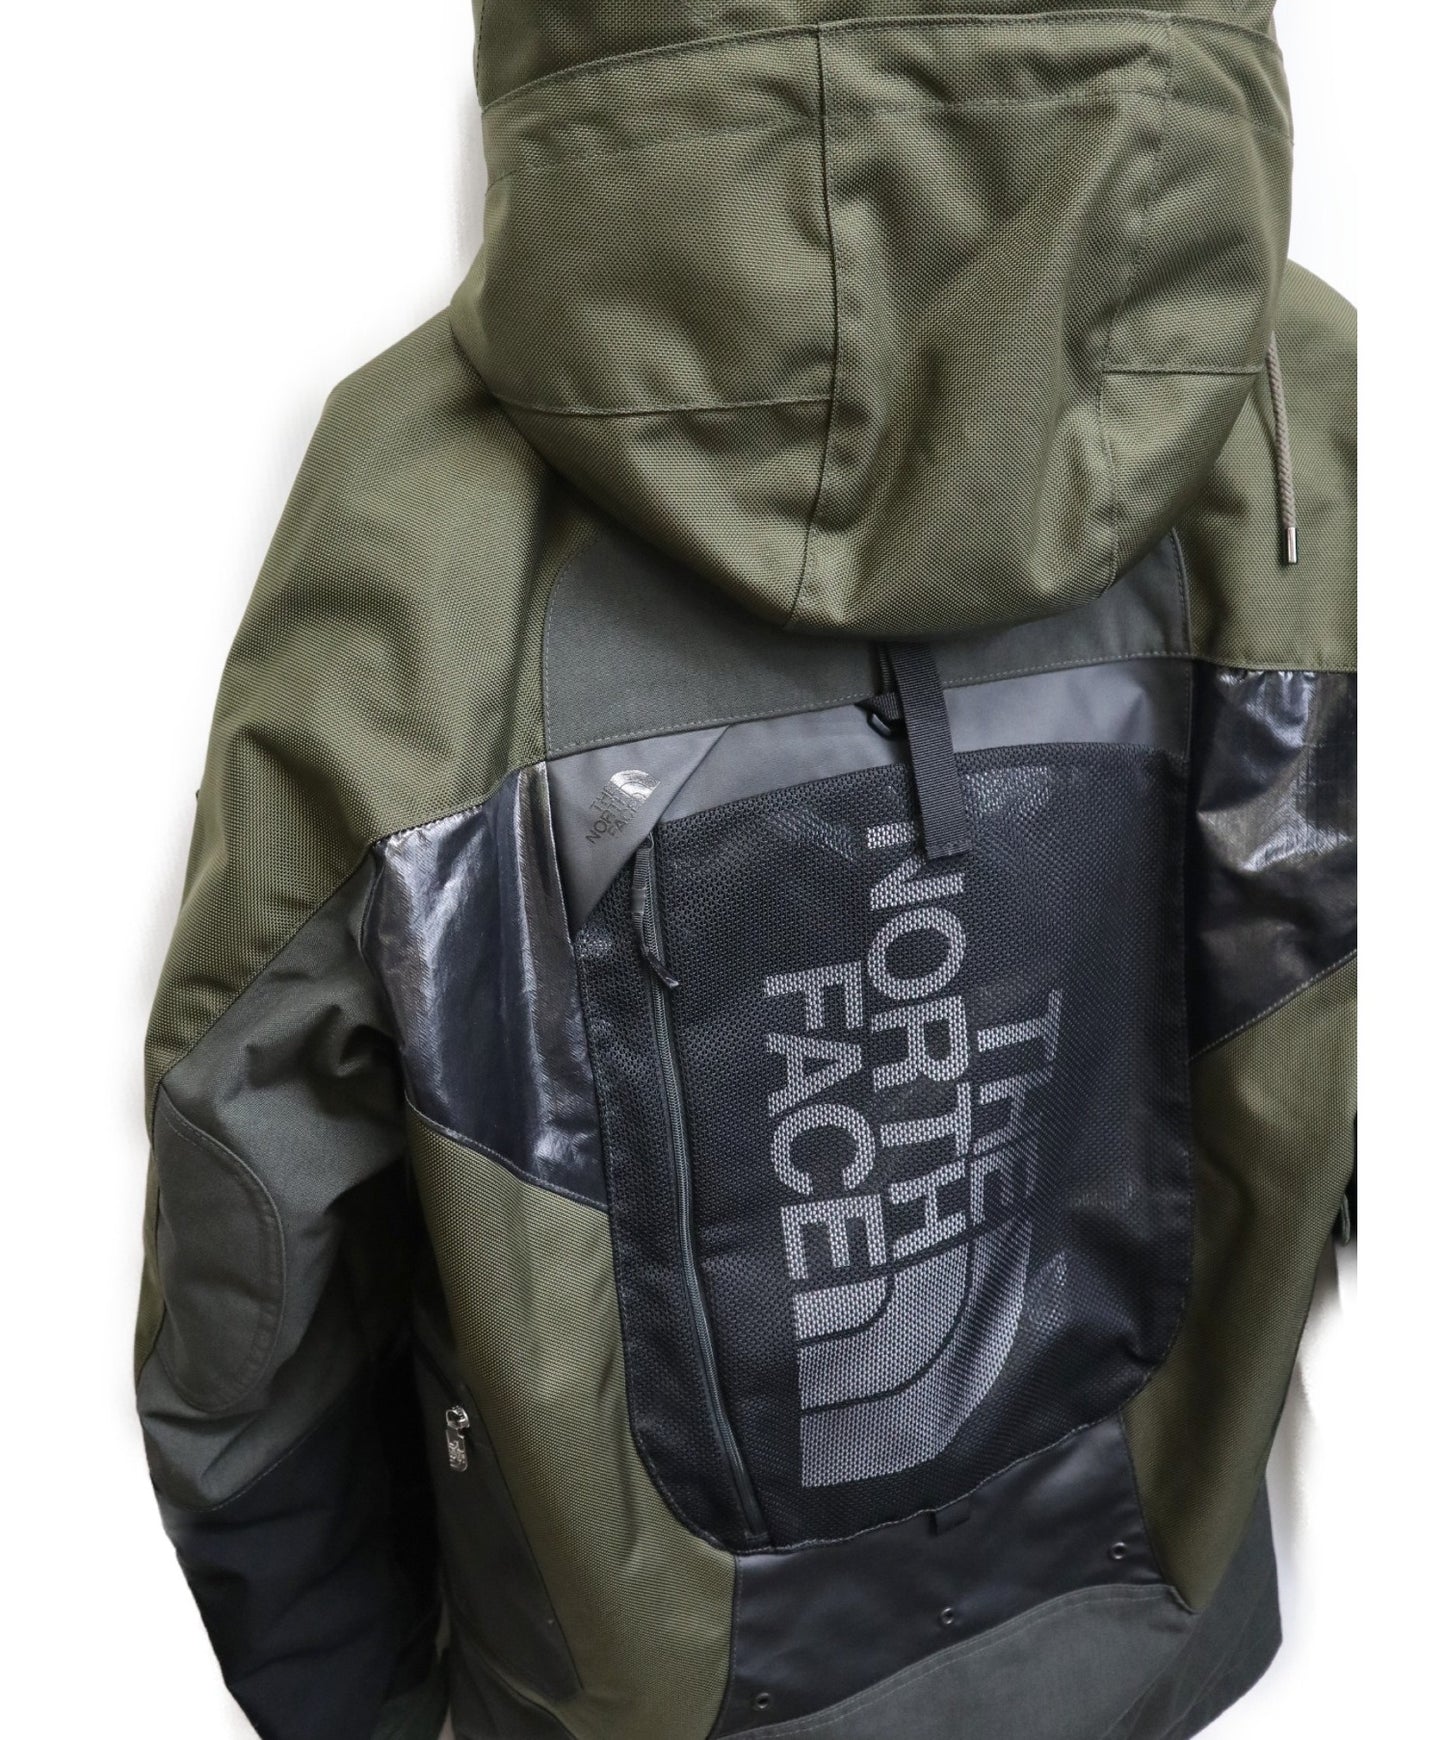 [Pre-owned] eYe COMME des GARCONS JUNYAWATNABE MAN Bag Customized Jacket WF-J926-100-1-3